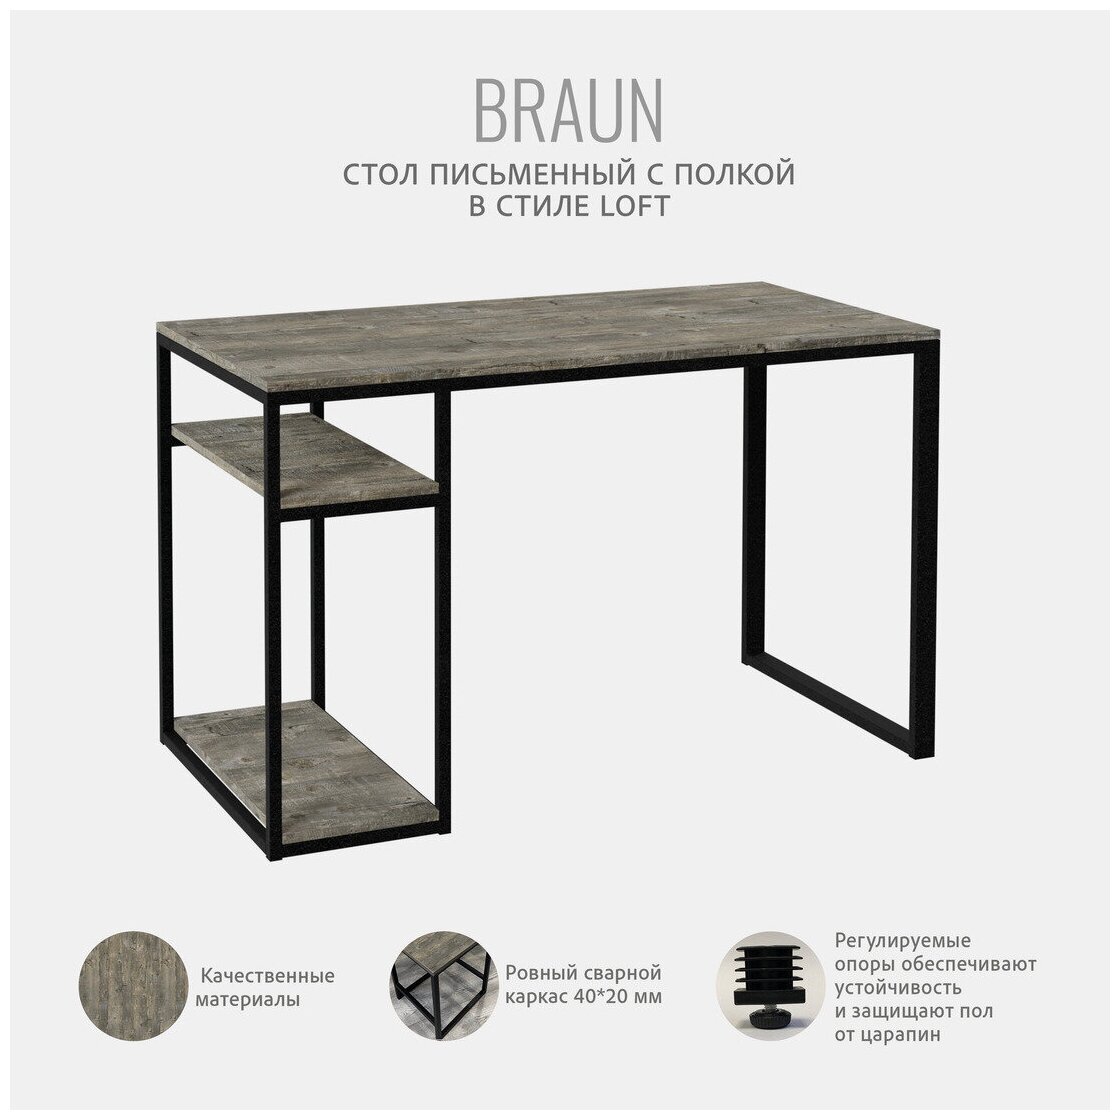 Стол письменный Braun loft